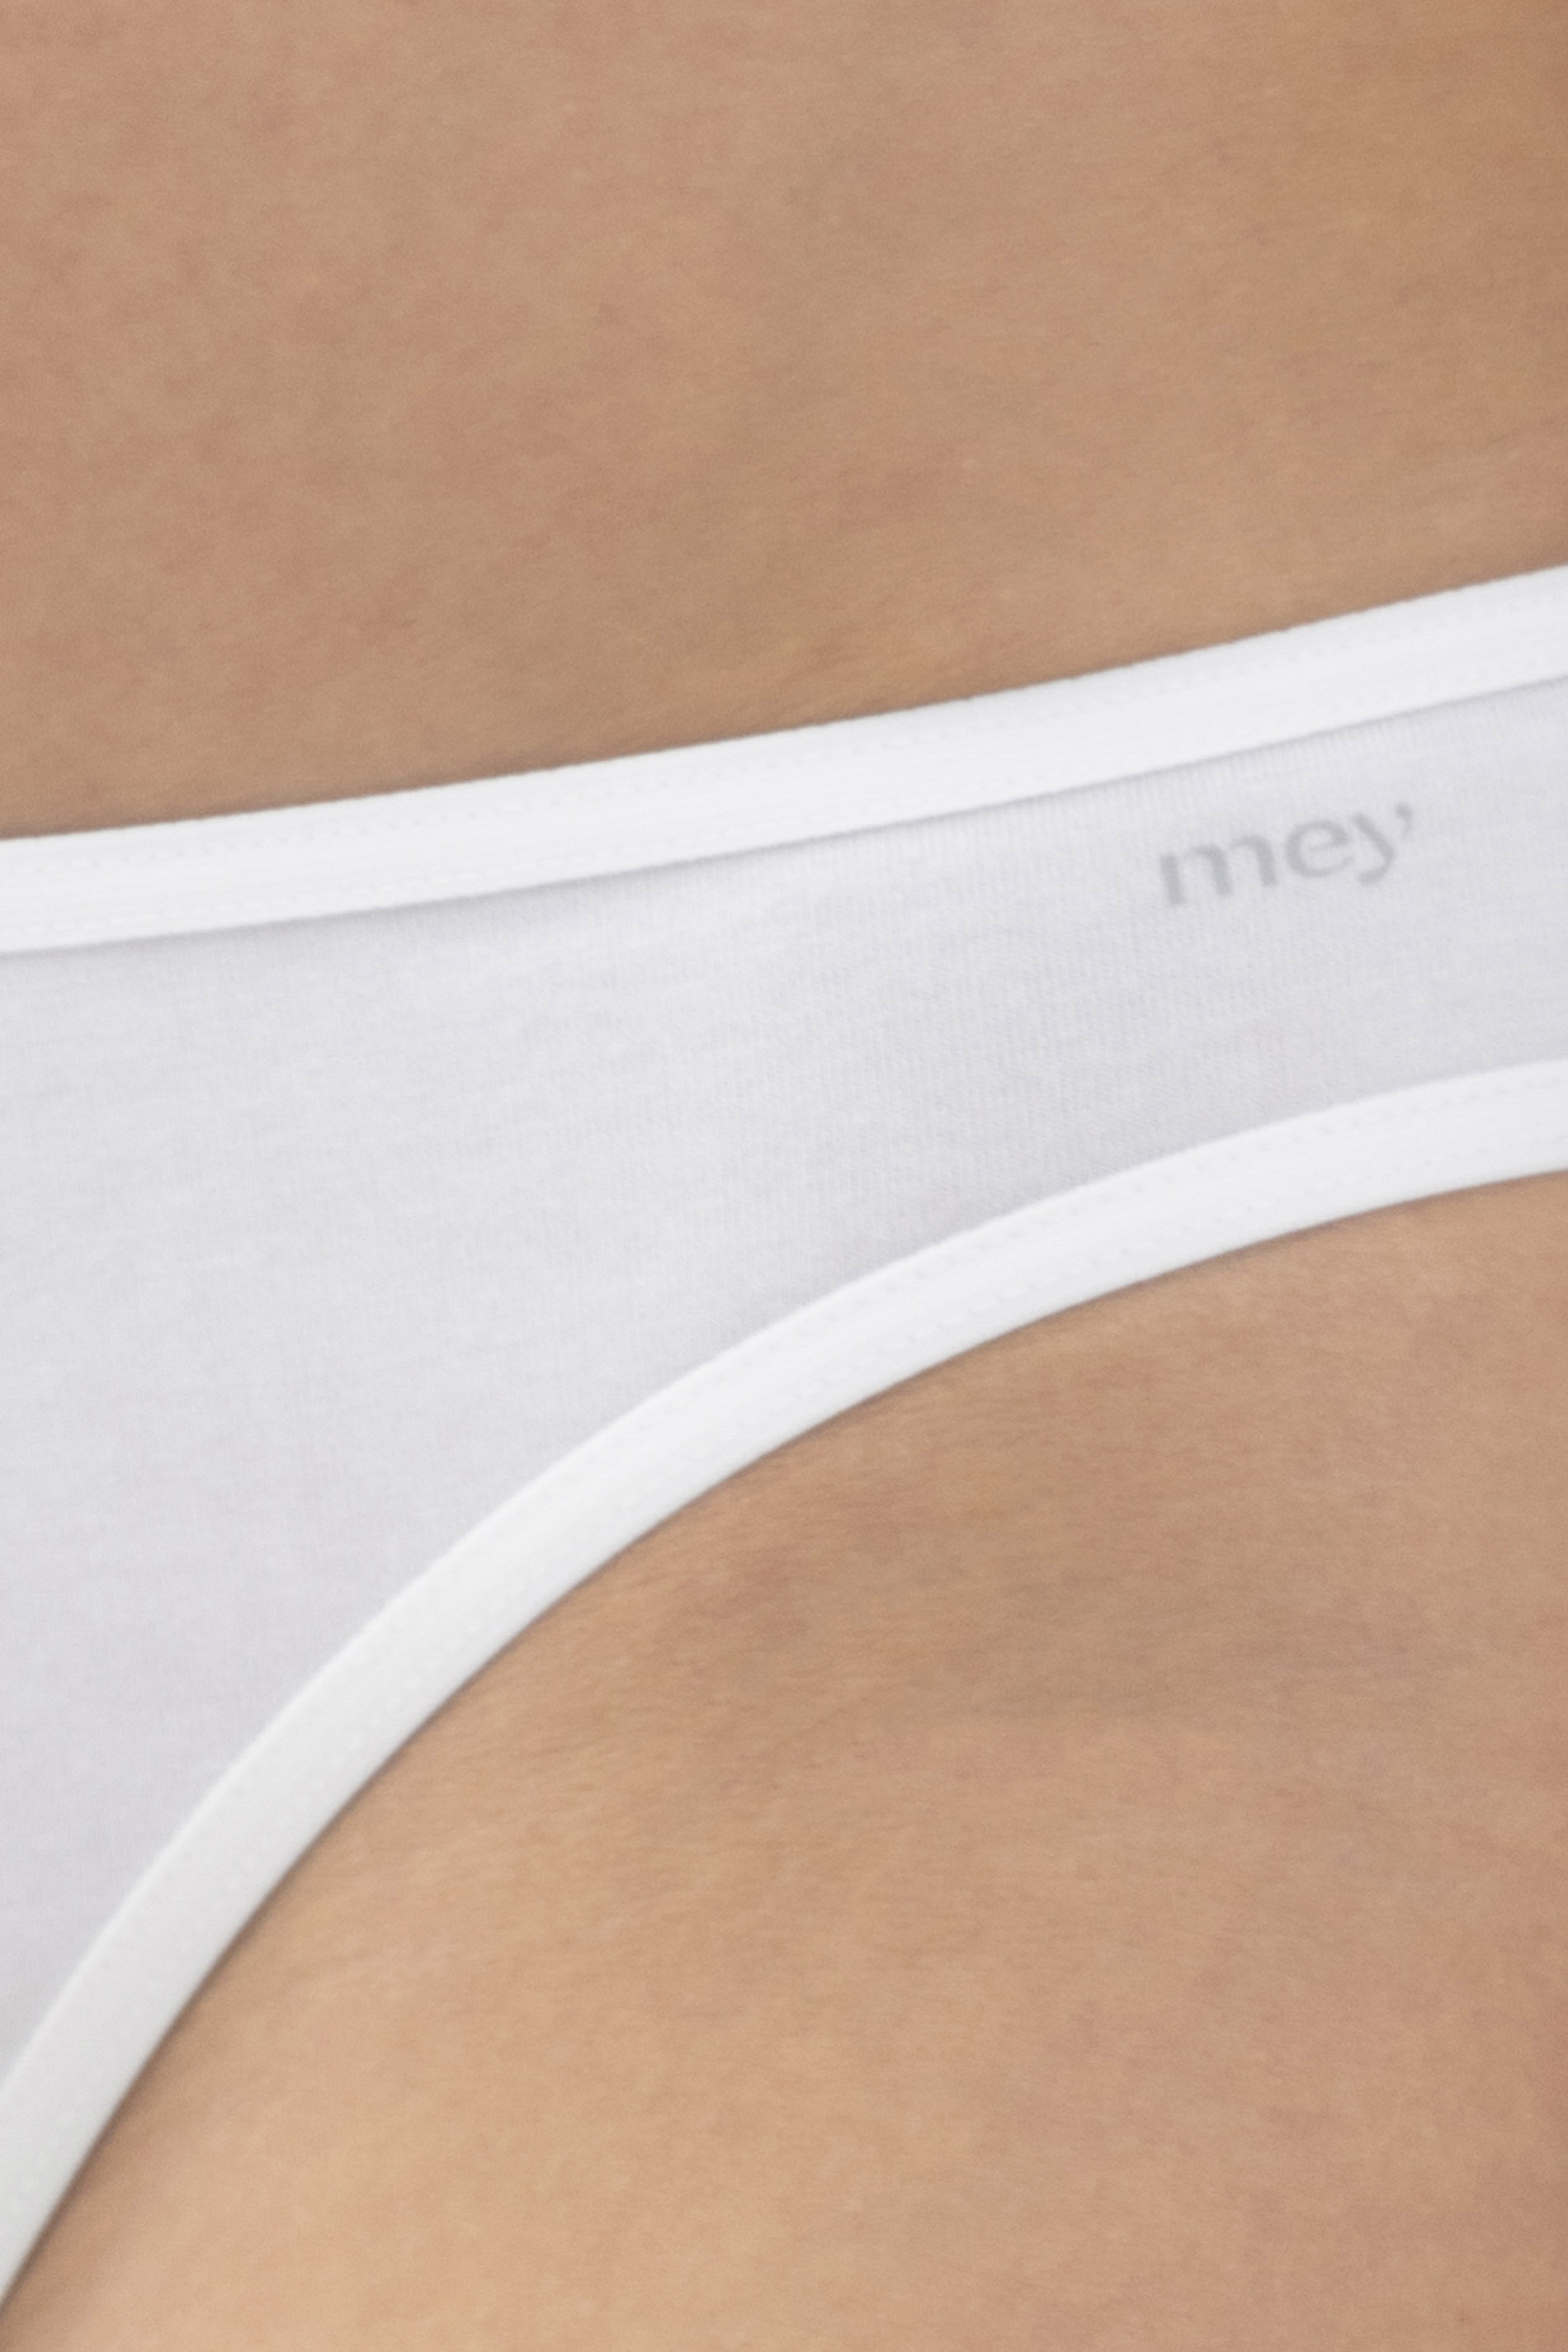 Mini-Slip White Serie Cotton Pure Detail View 01 | mey®